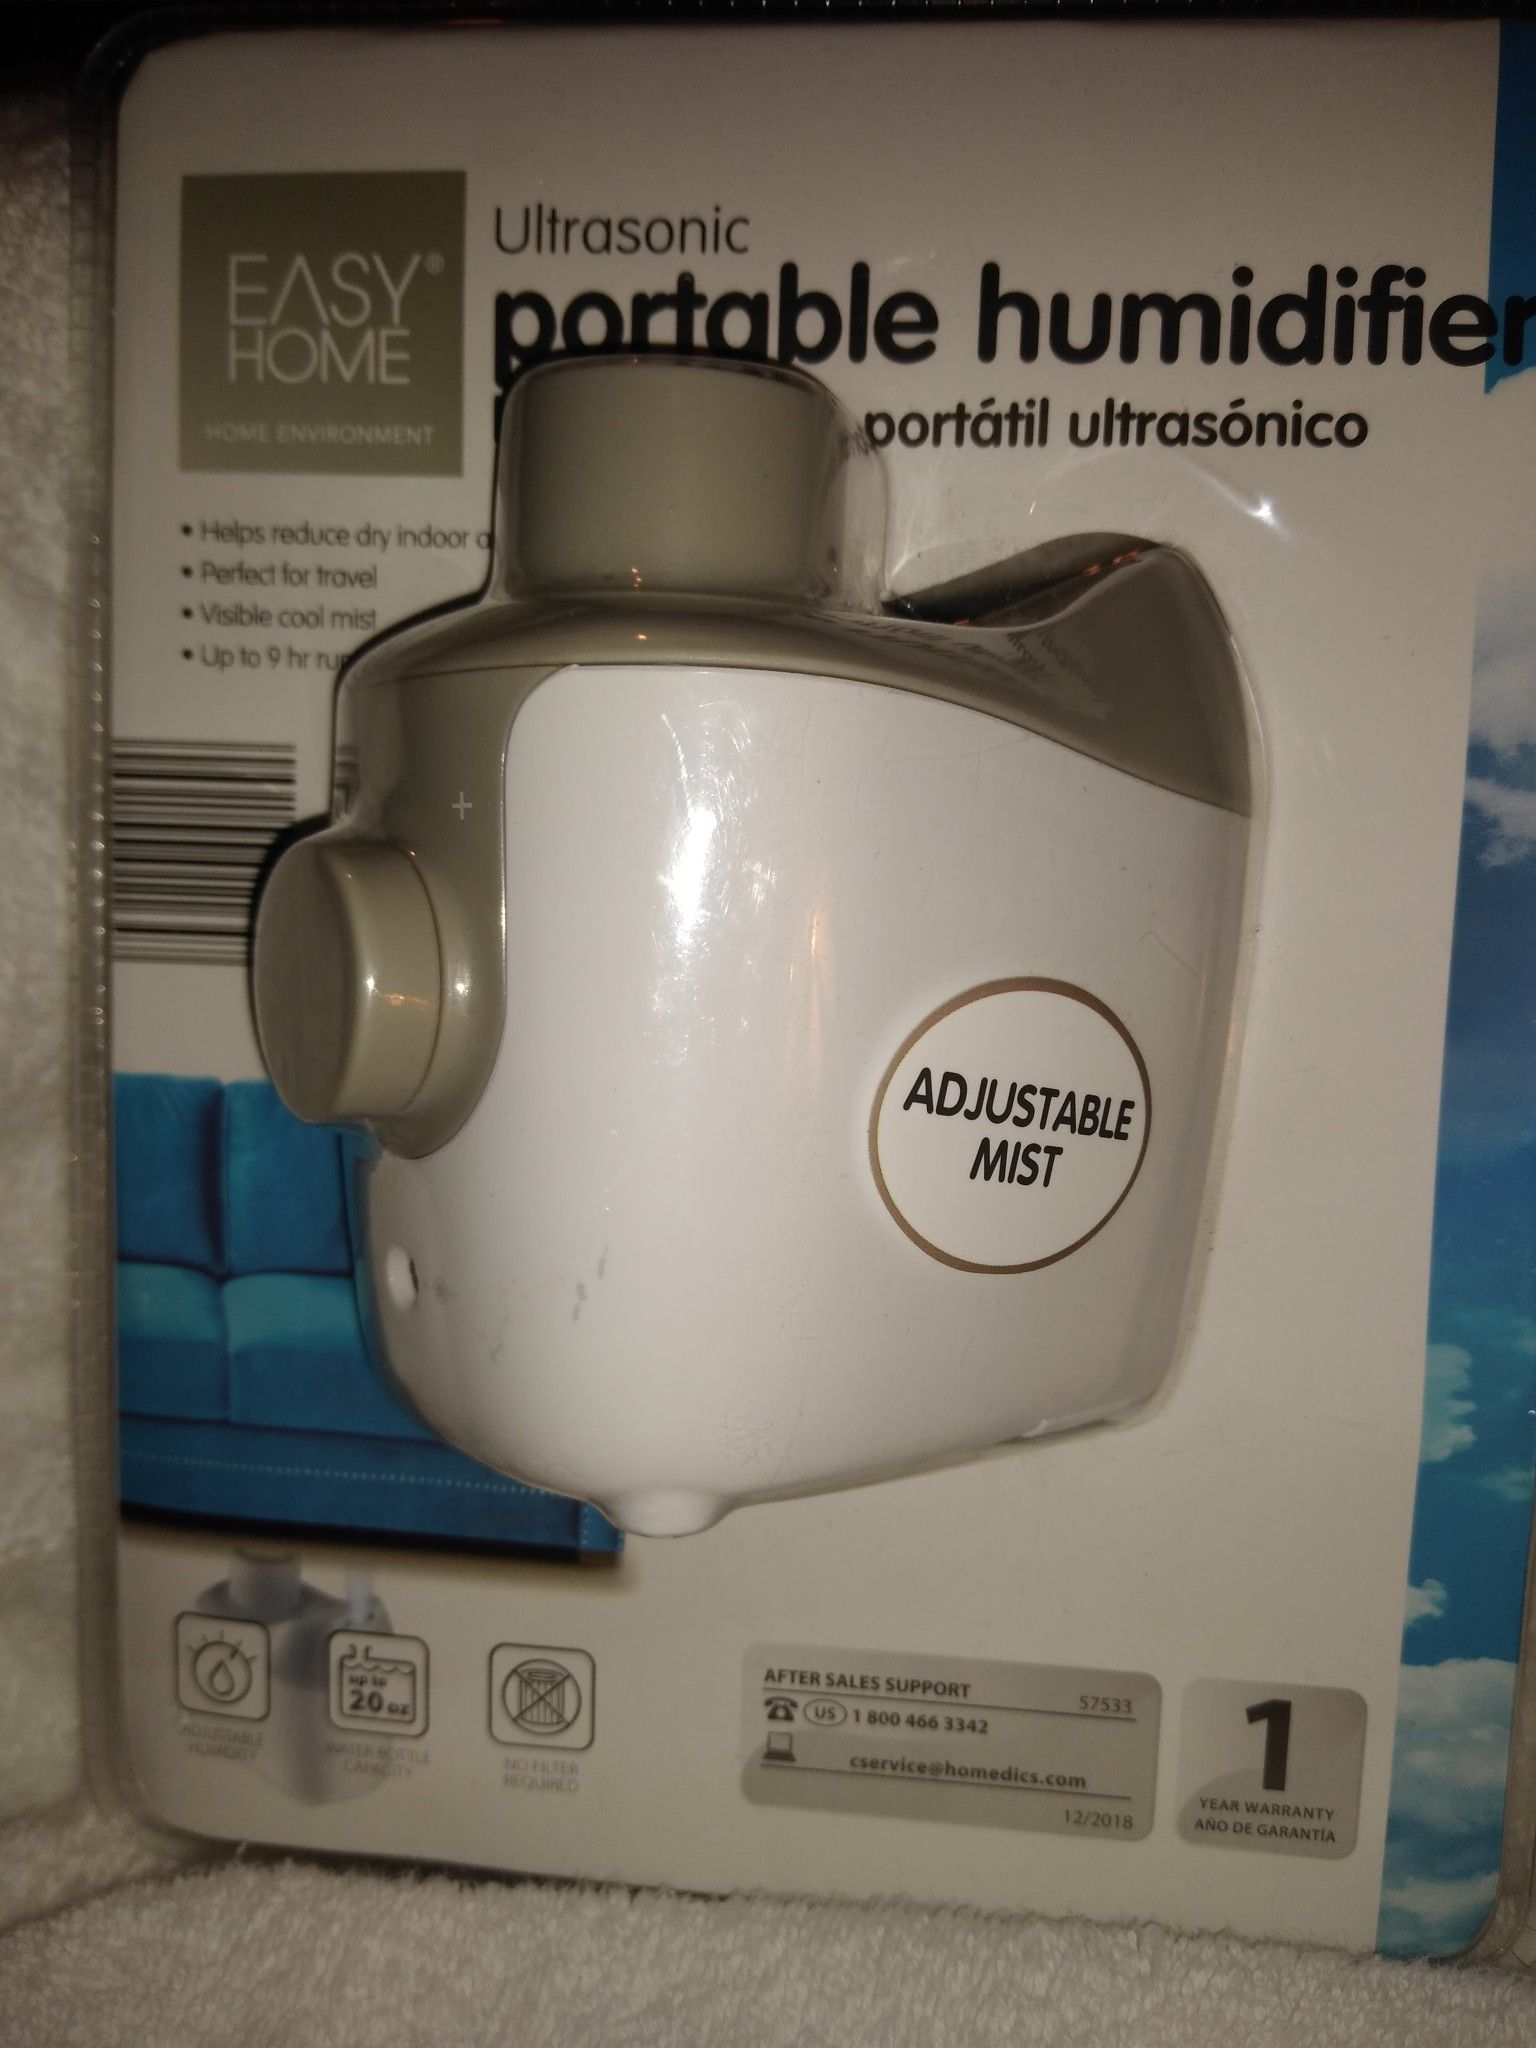 easy home ultrasonic portable humidifier